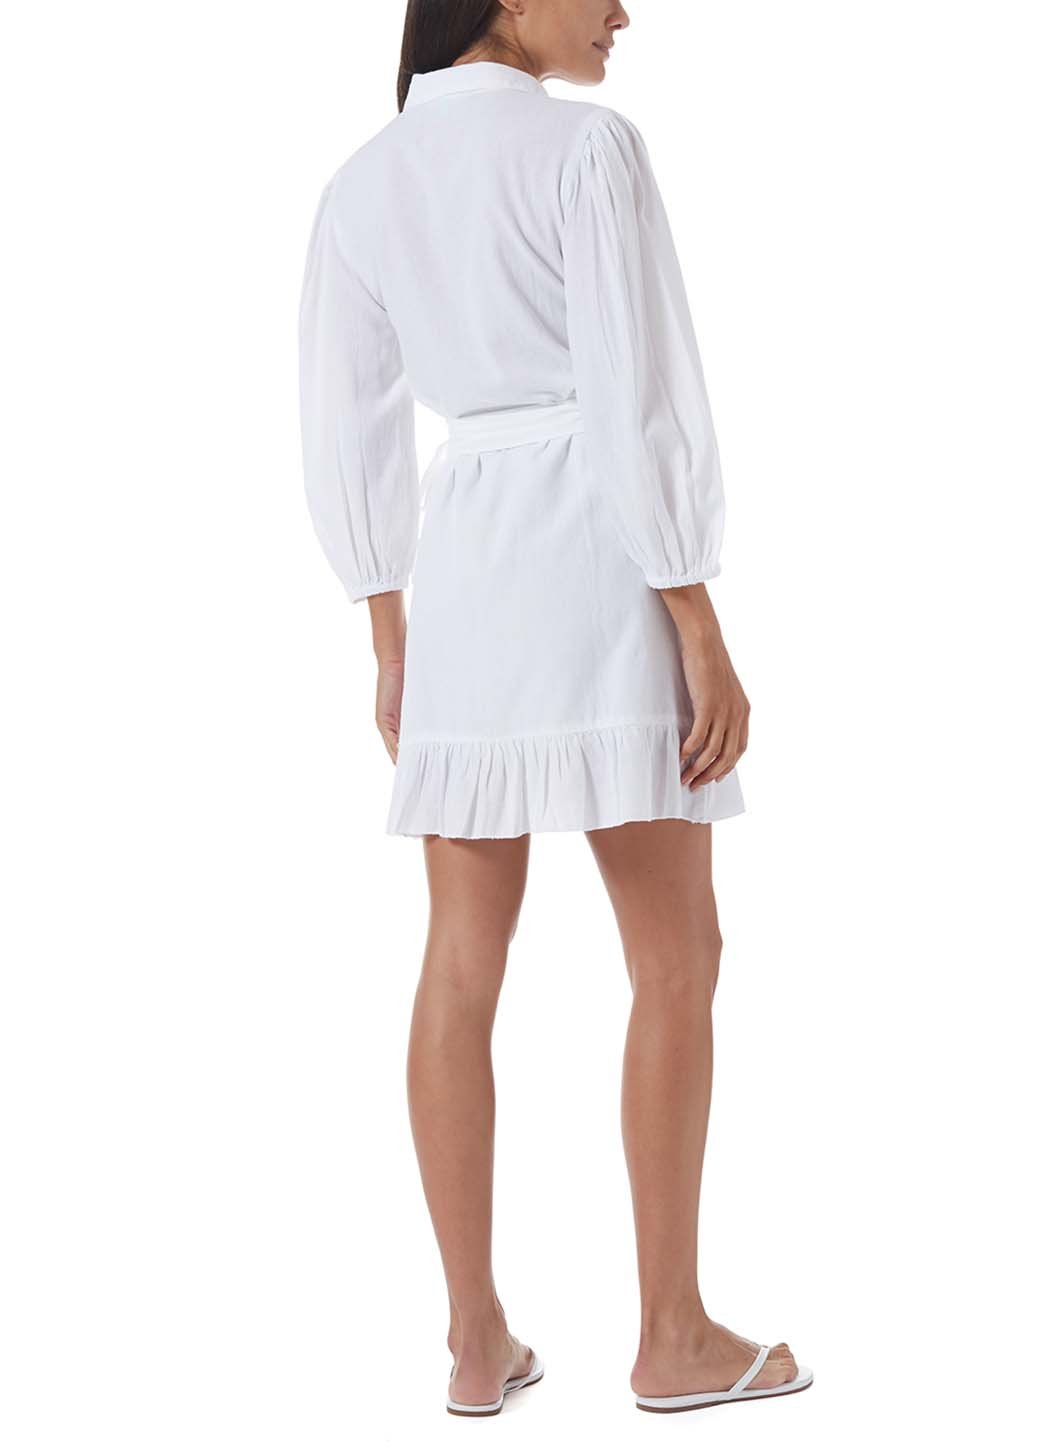 paige white wrap shirt short dress model_B